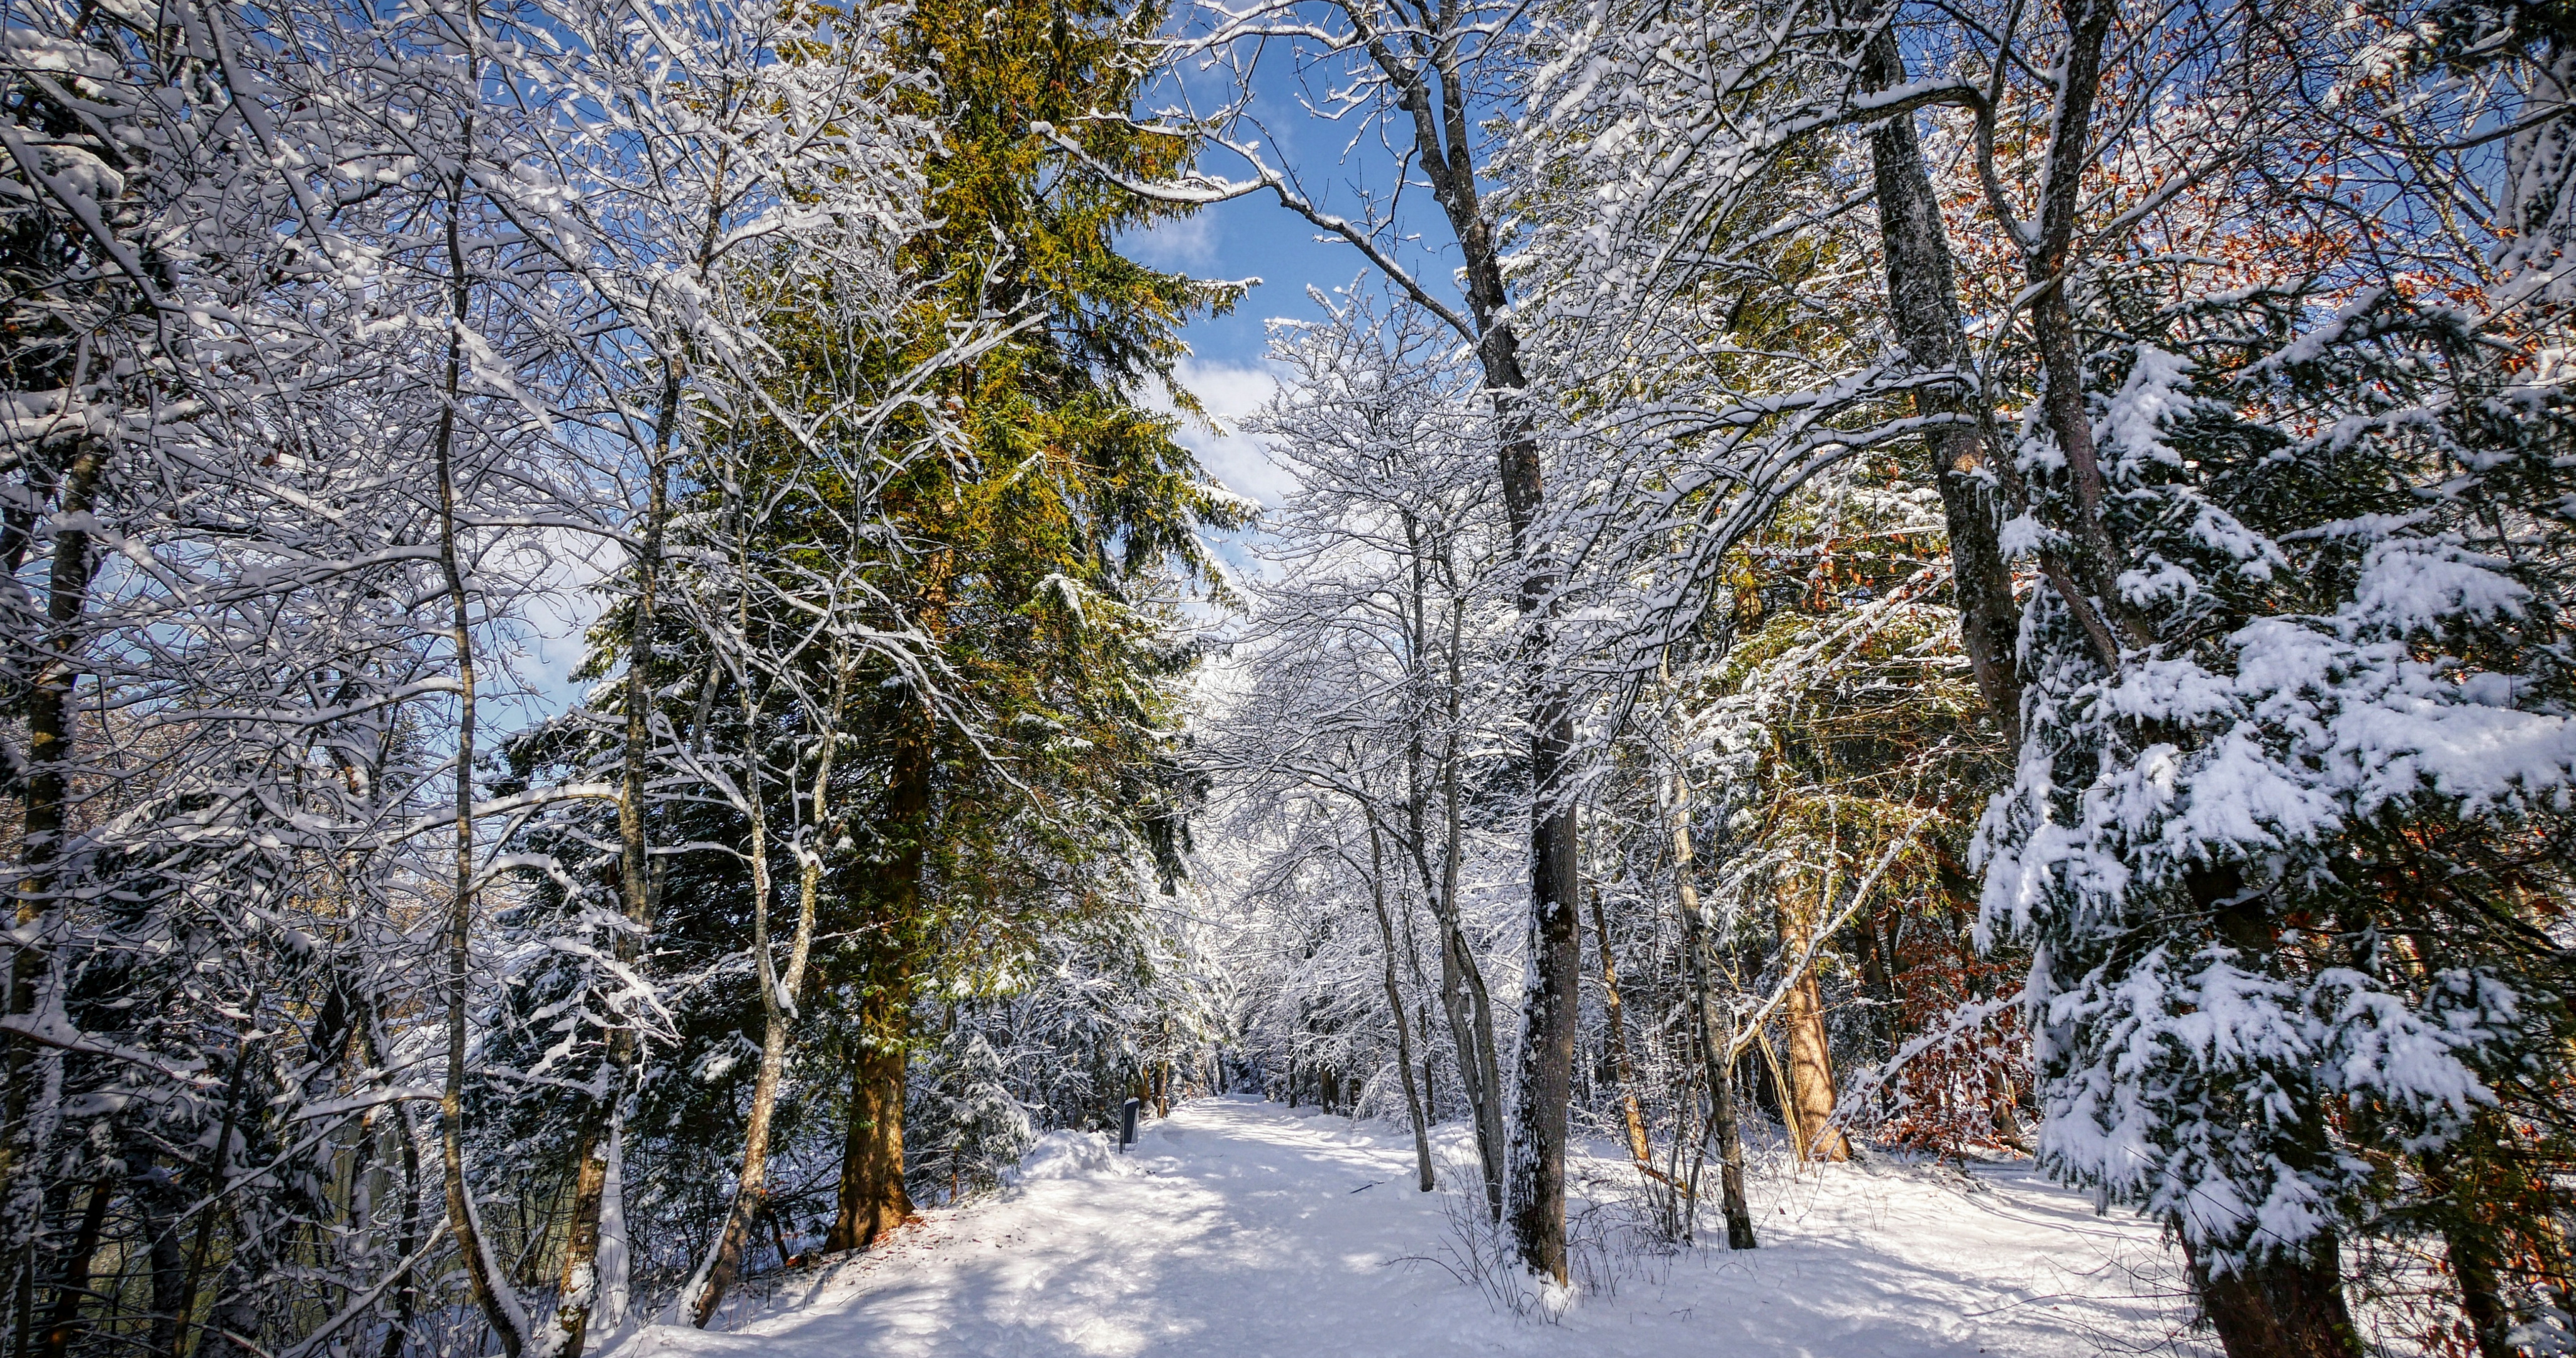 Обои на рабочий стол зима, деревья, дорога, пейзаж, снег, природа, лес